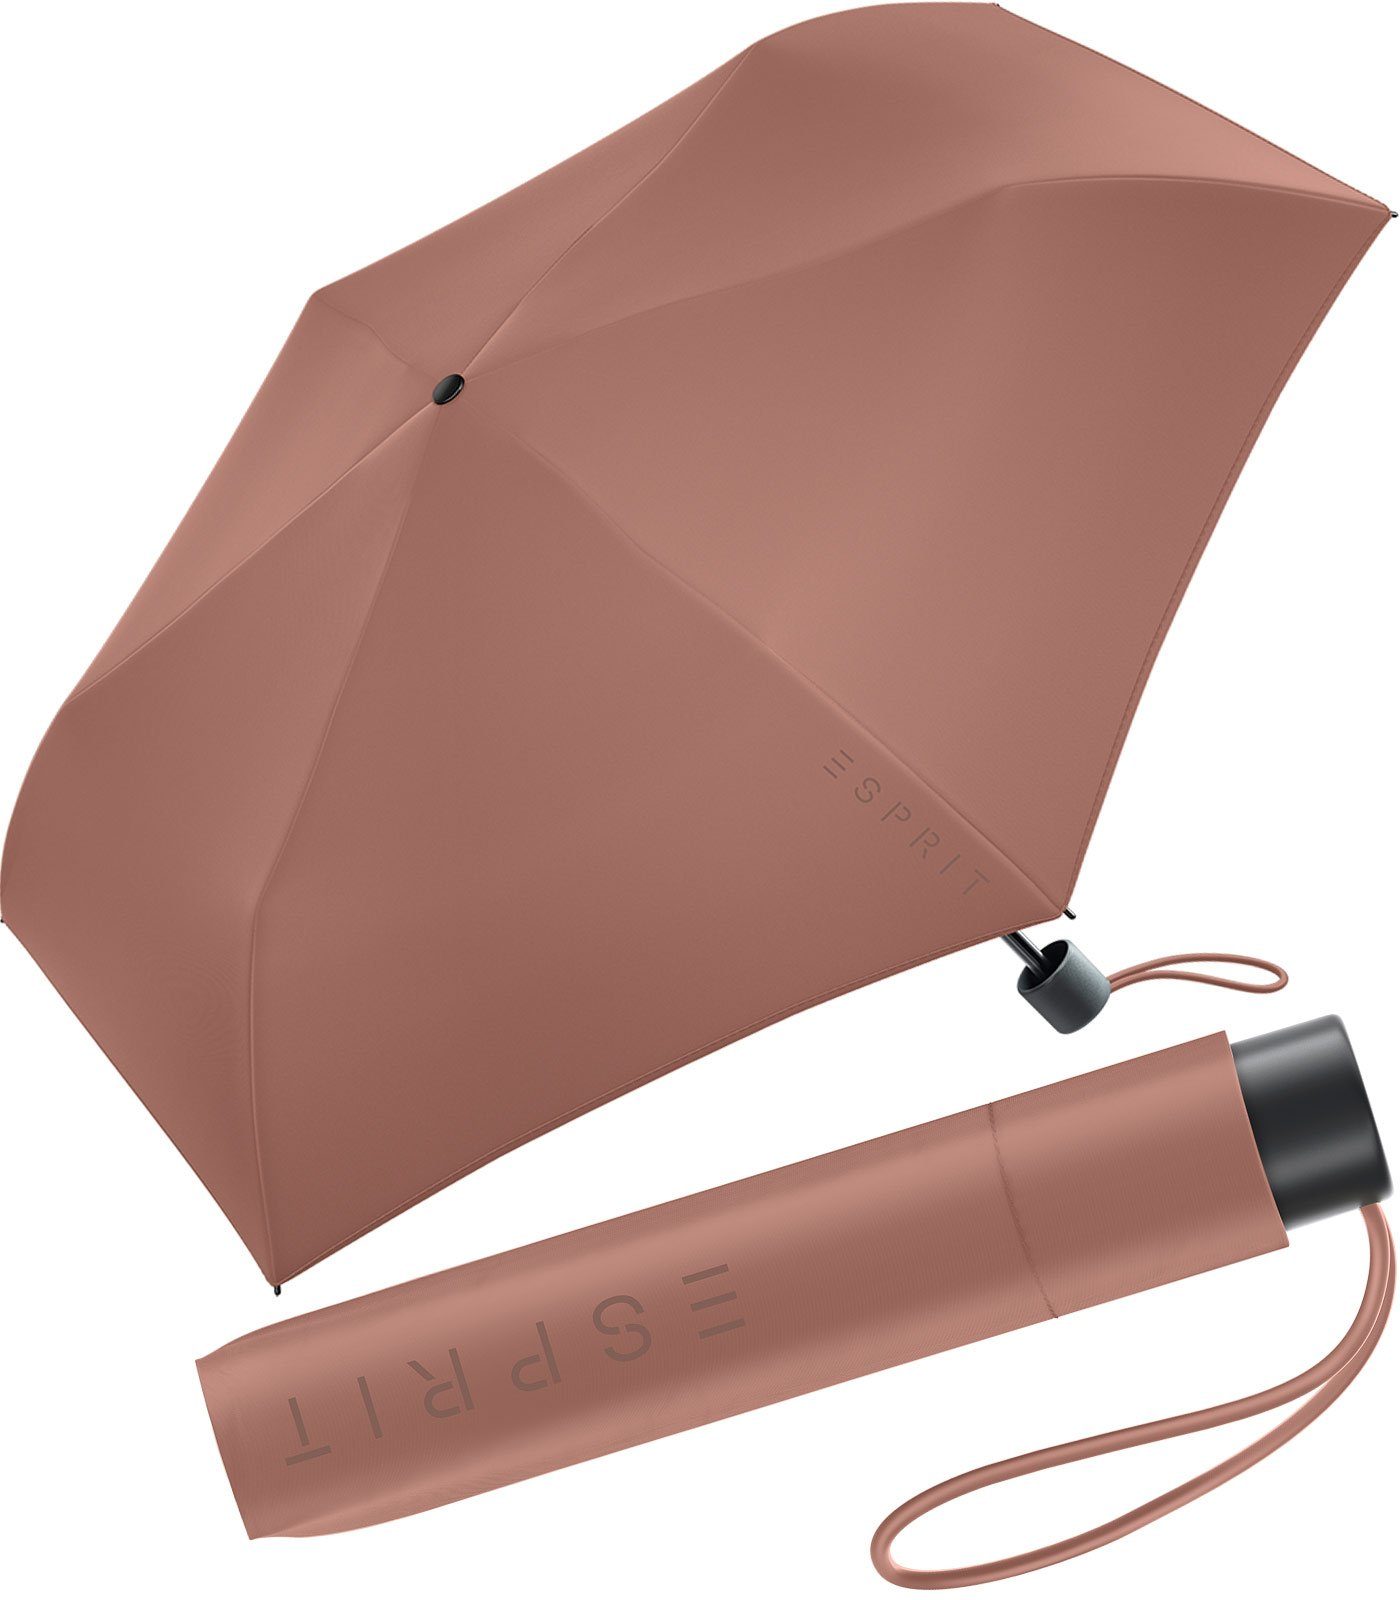 Esprit Langregenschirm Mini Regenschirm Damen Slimline HW 2023, in den neuen Trendfarben - chutney braun